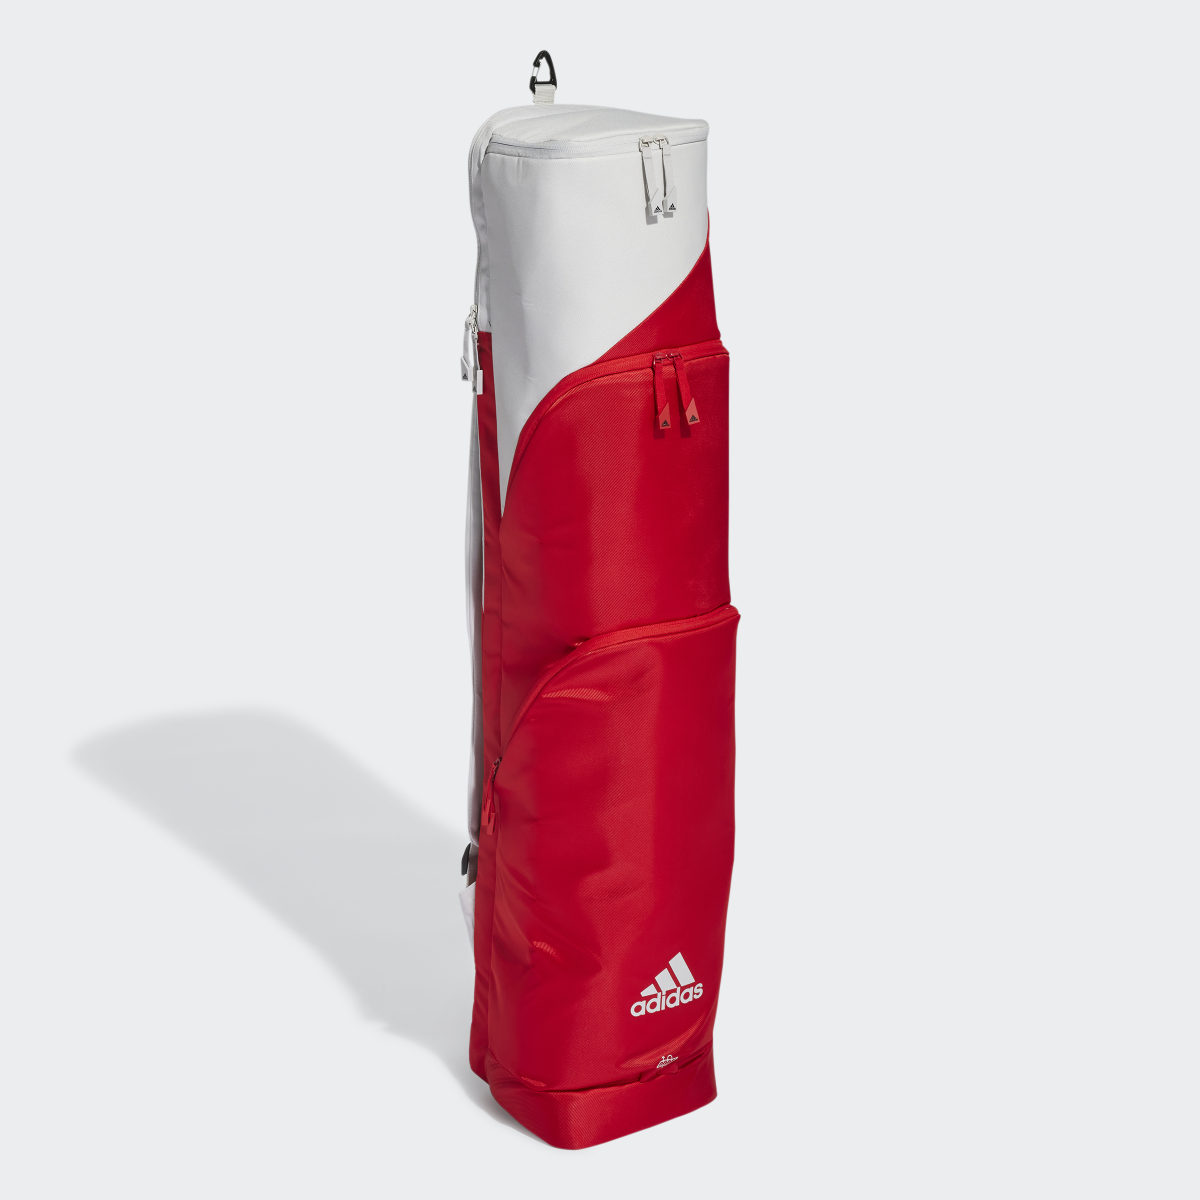 Adidas VS.6 Red/Grey Hockey Stick Bag. 4